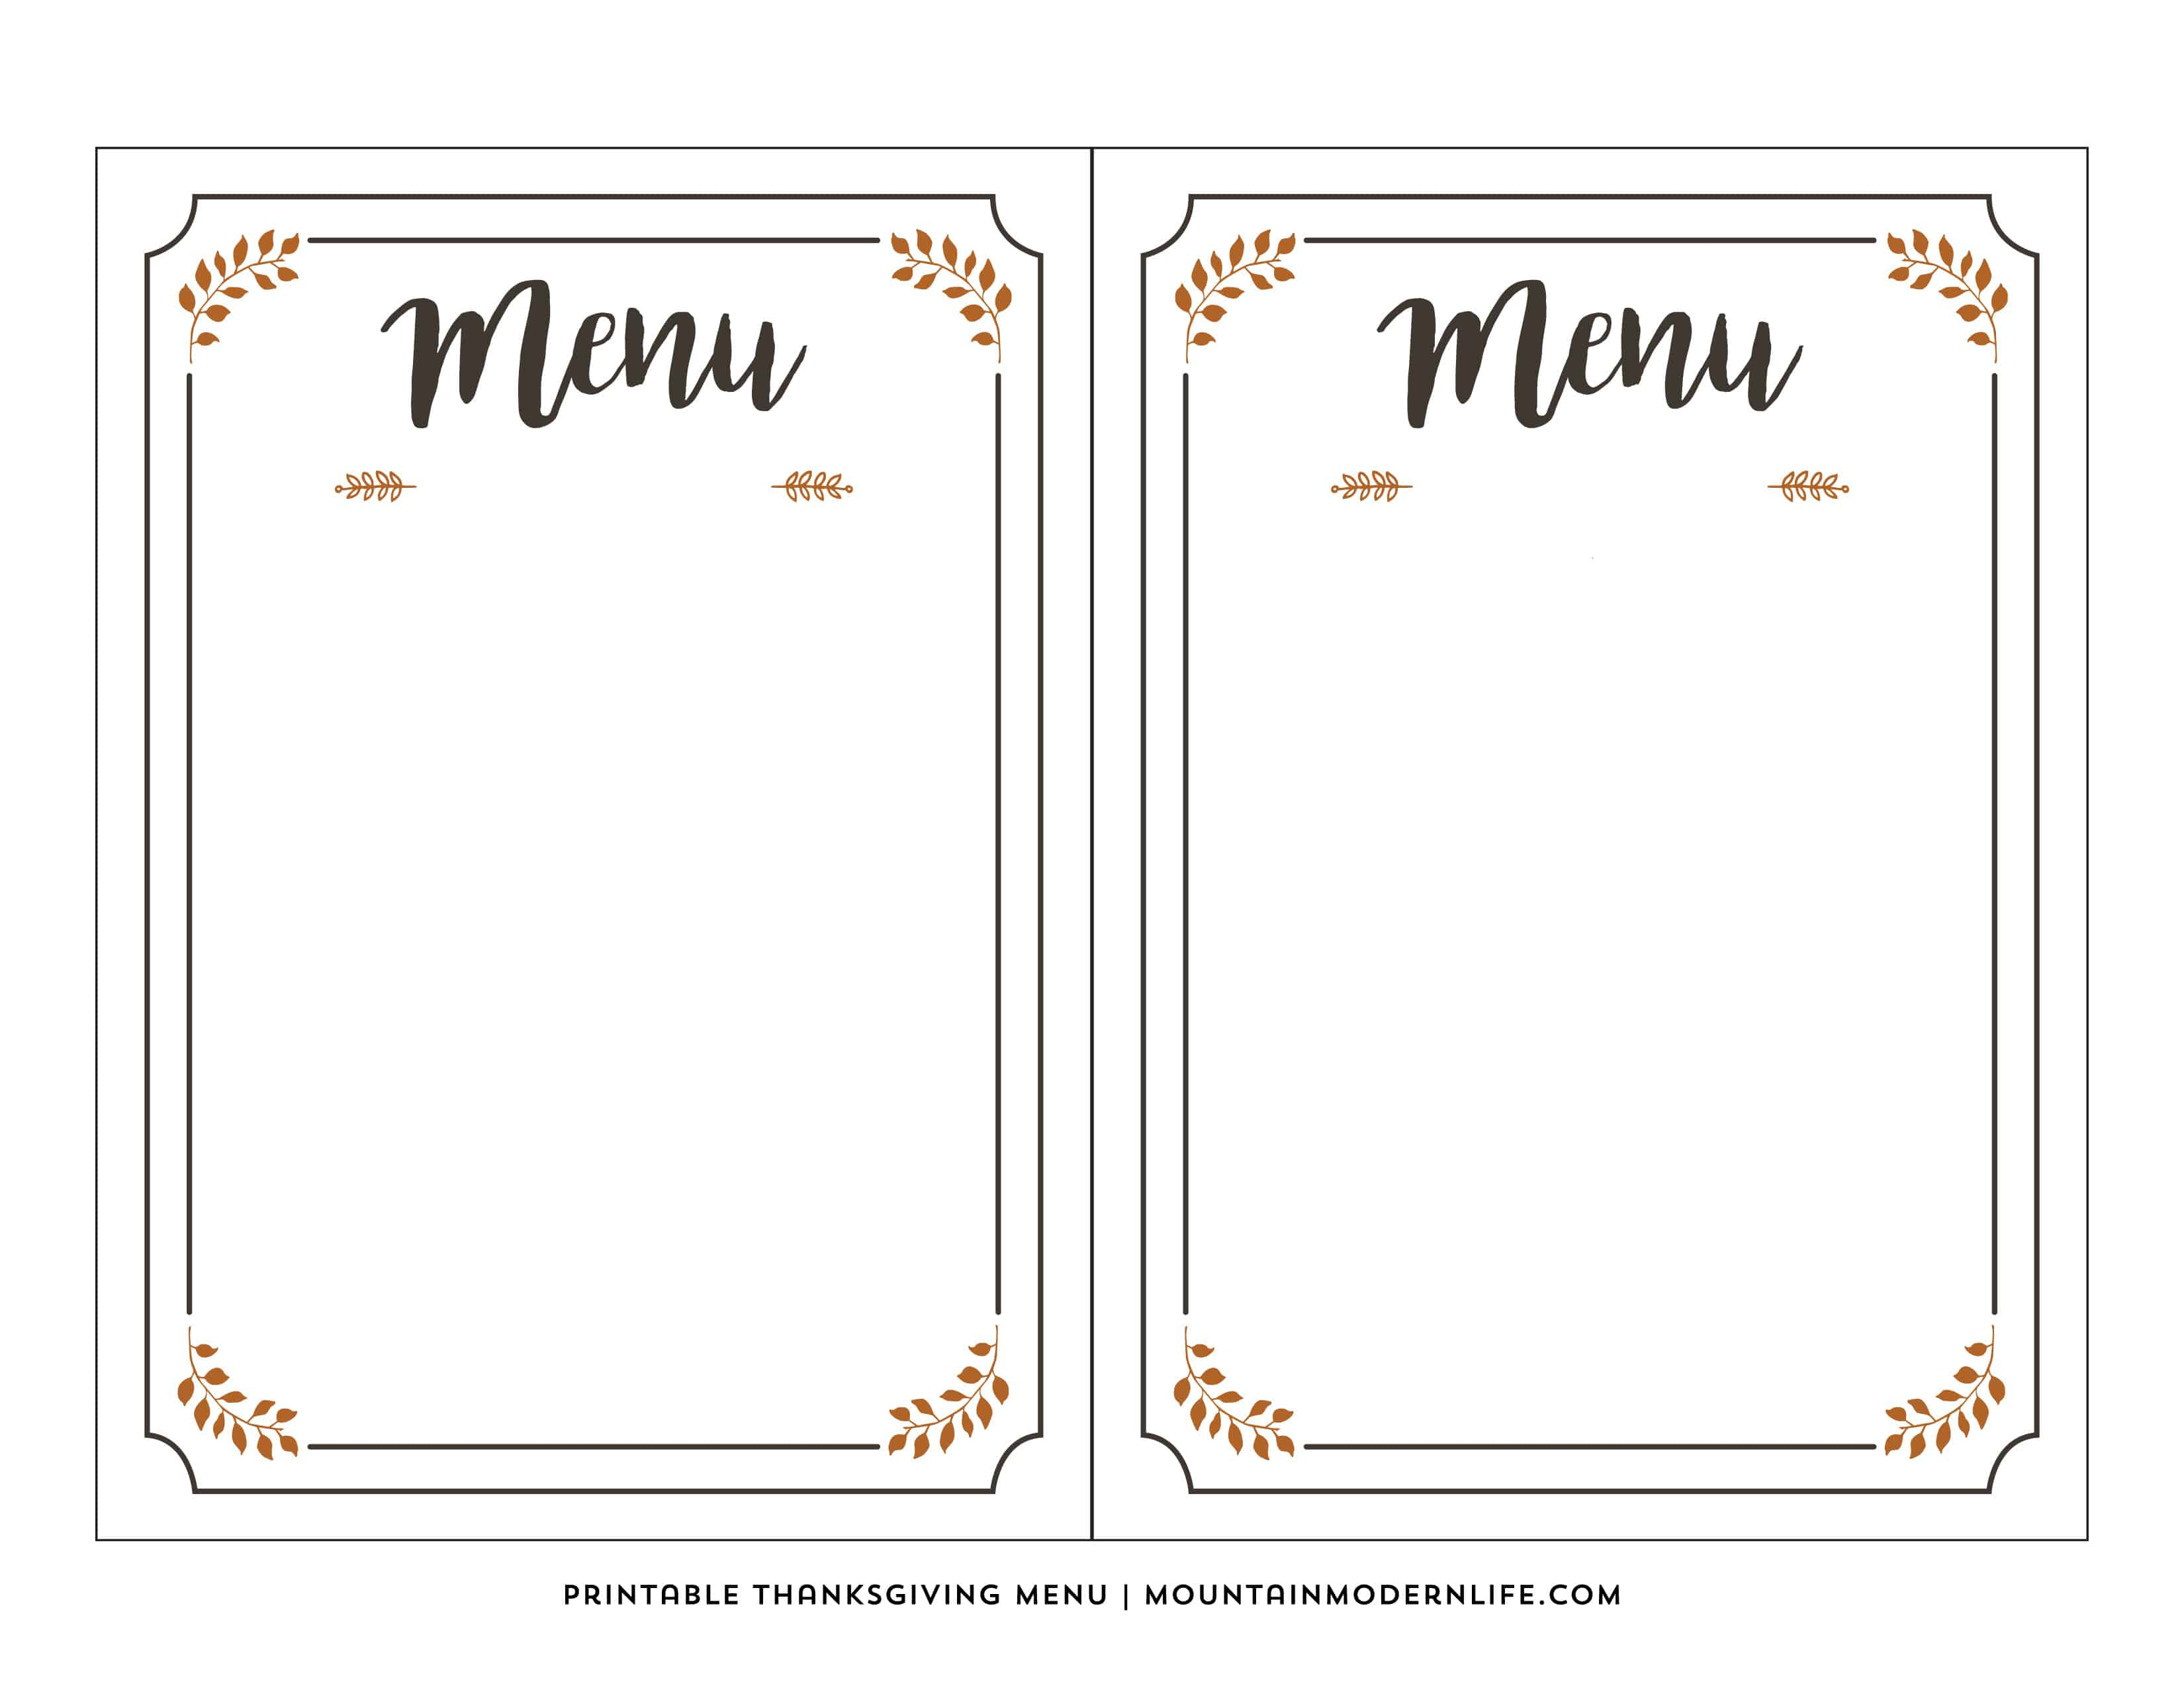 Free Printable Thanksgiving Menu | Mountainmodernlife - Free Printable Thanksgiving Menu Template